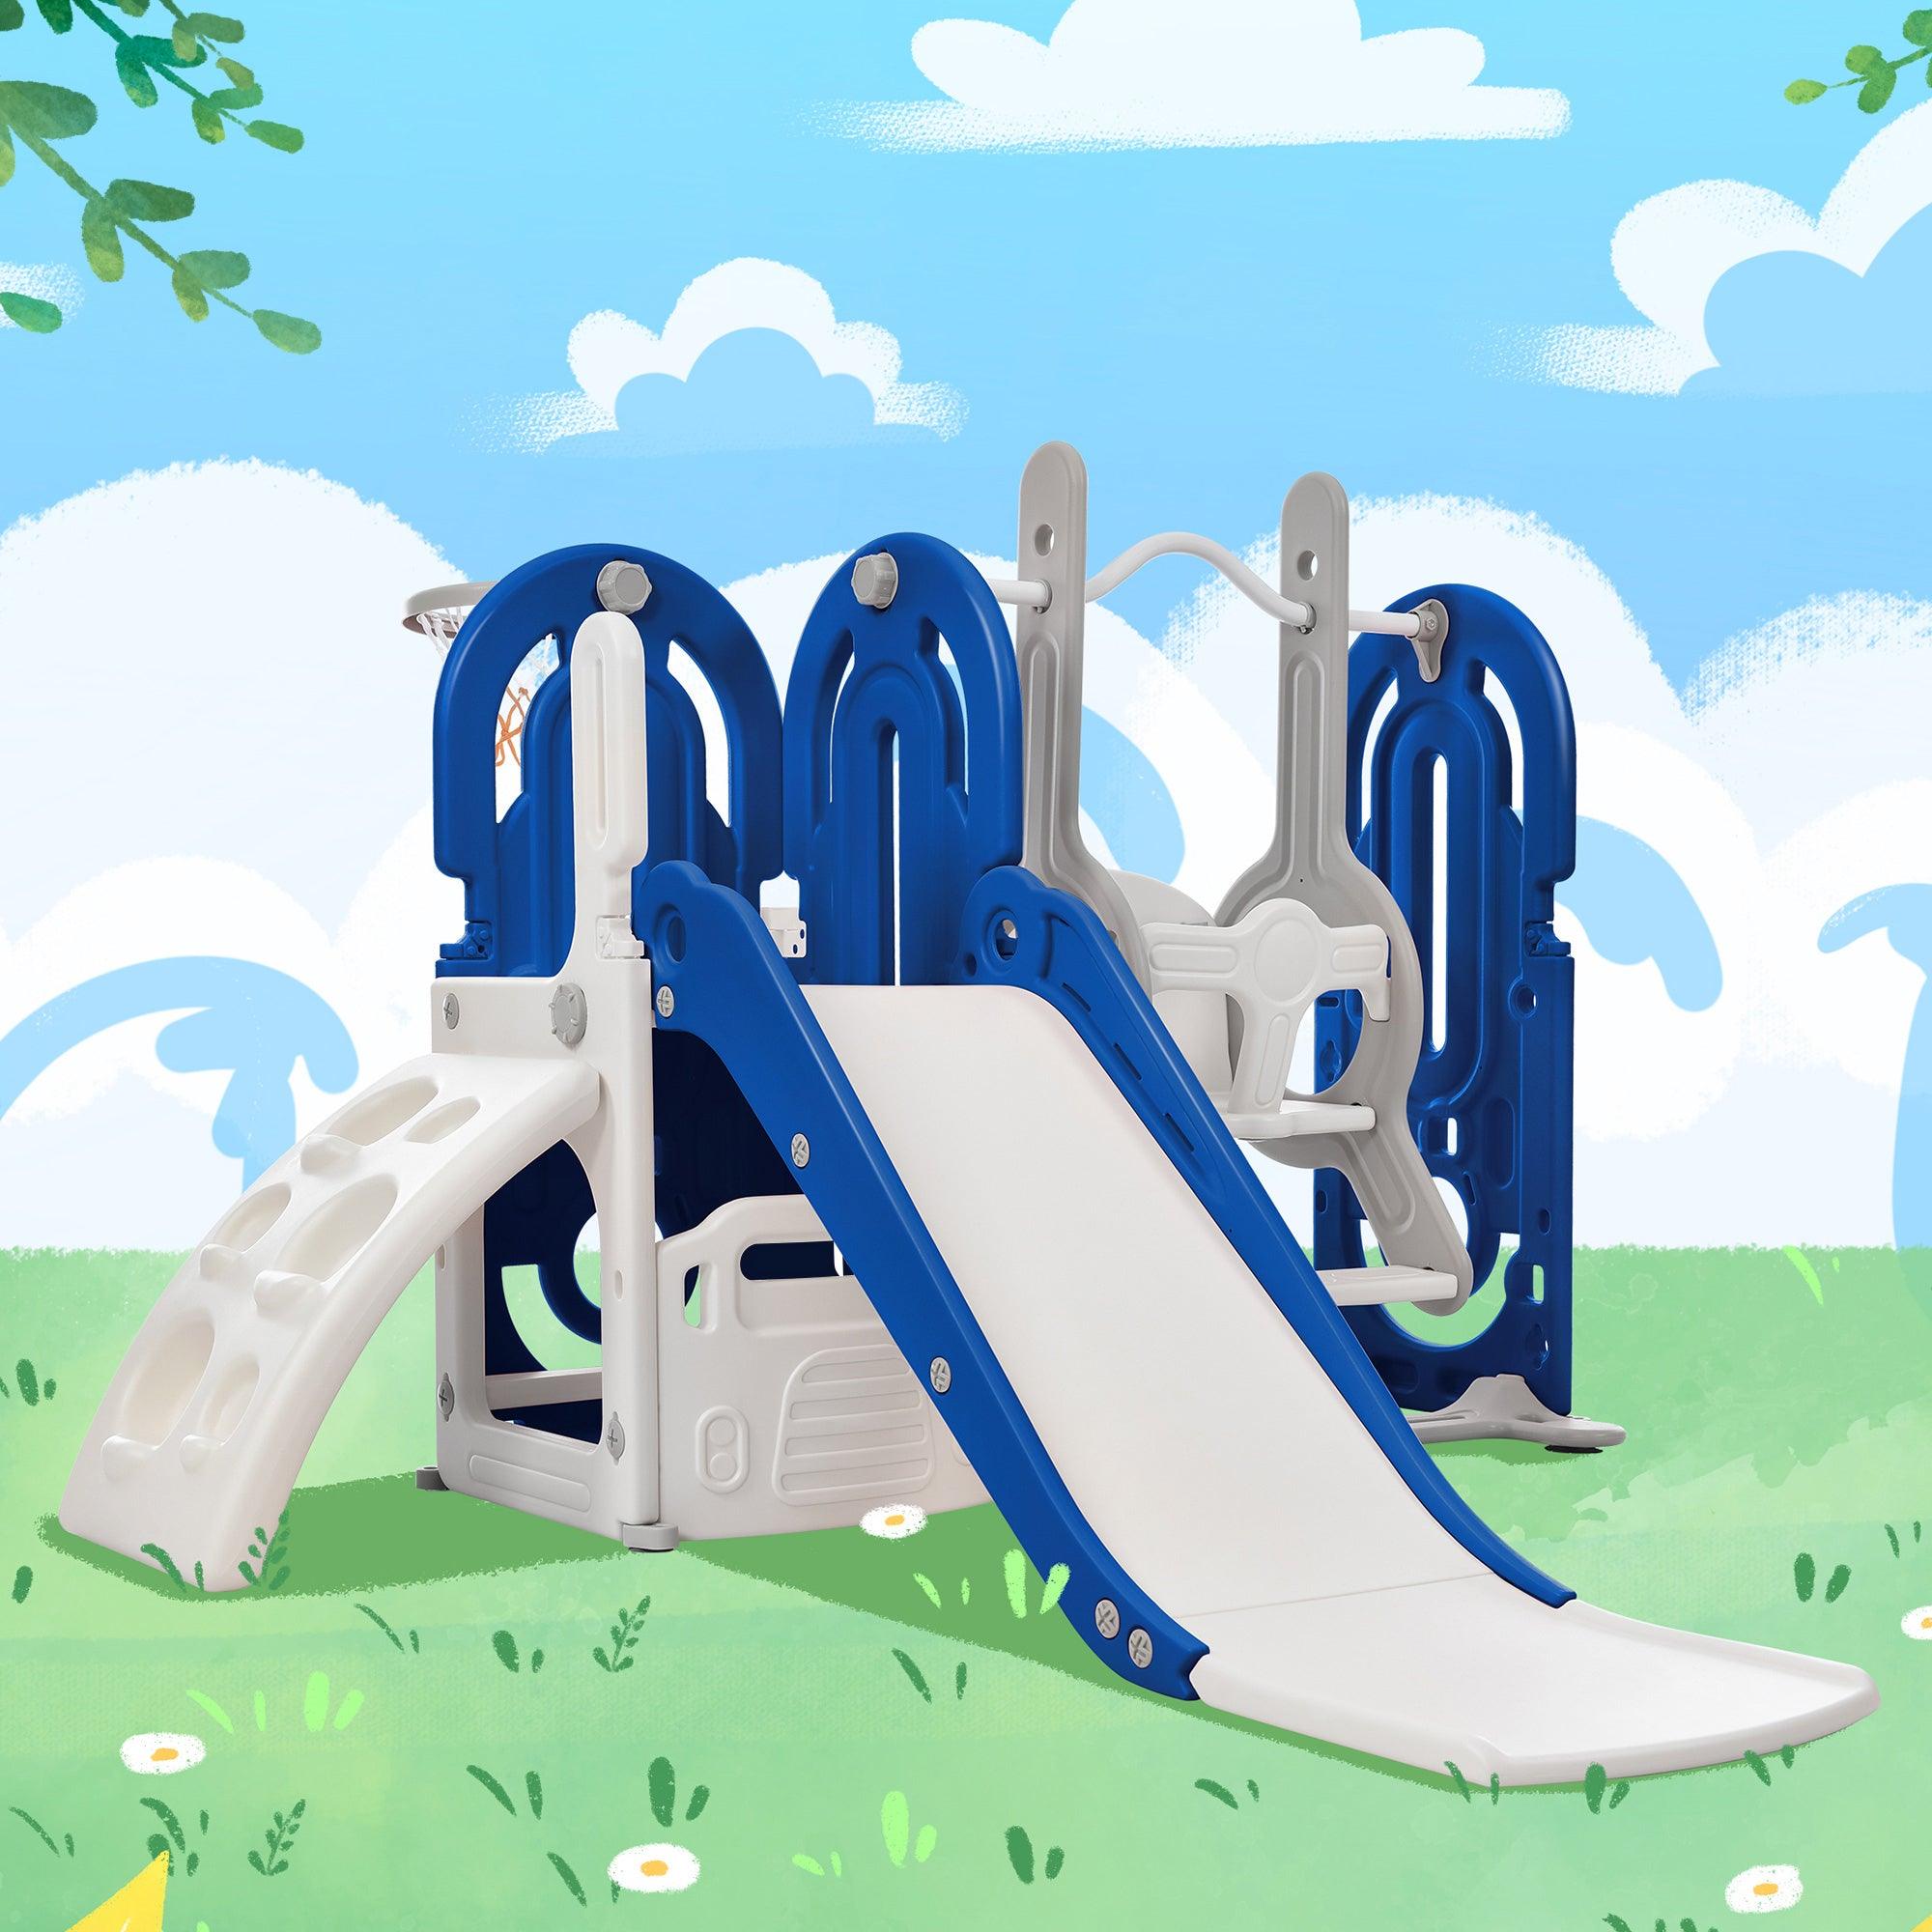 🆓🚛 Toddler Slide & Swing Set 5 in 1, Kids Playground Climber Slide Playset With Basketball Hoop Freestanding Combination for Babies Indoor & Outdoor